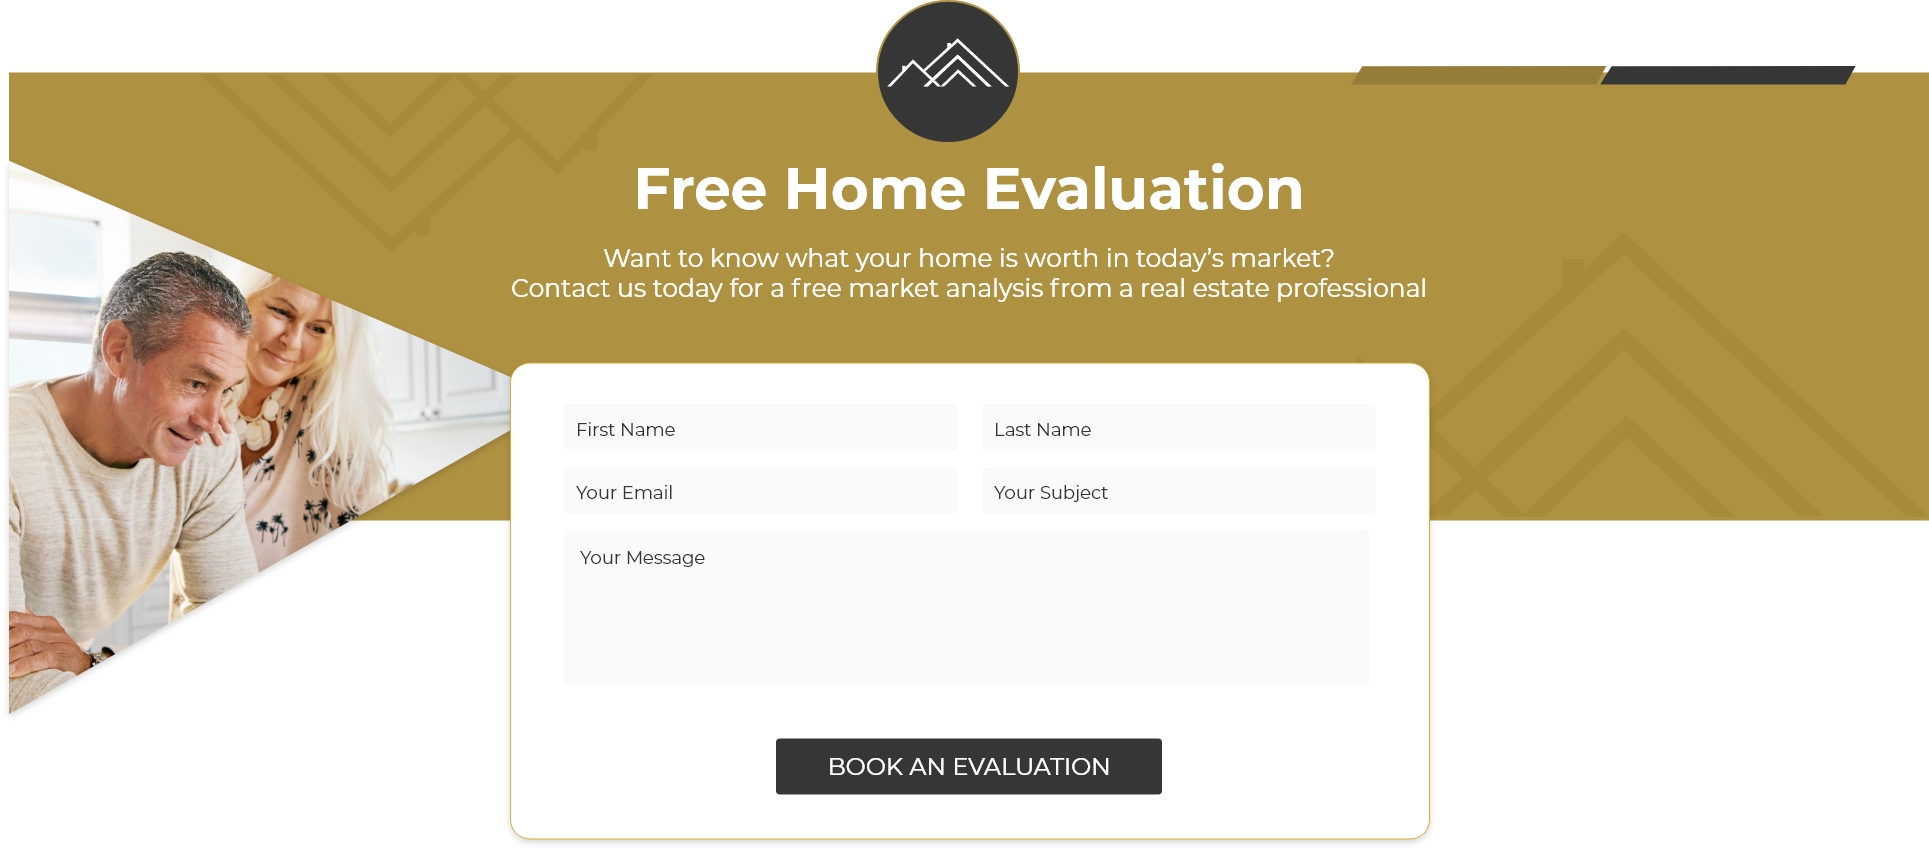 Team D'Alimonte Website - Free Home Evaluation Form